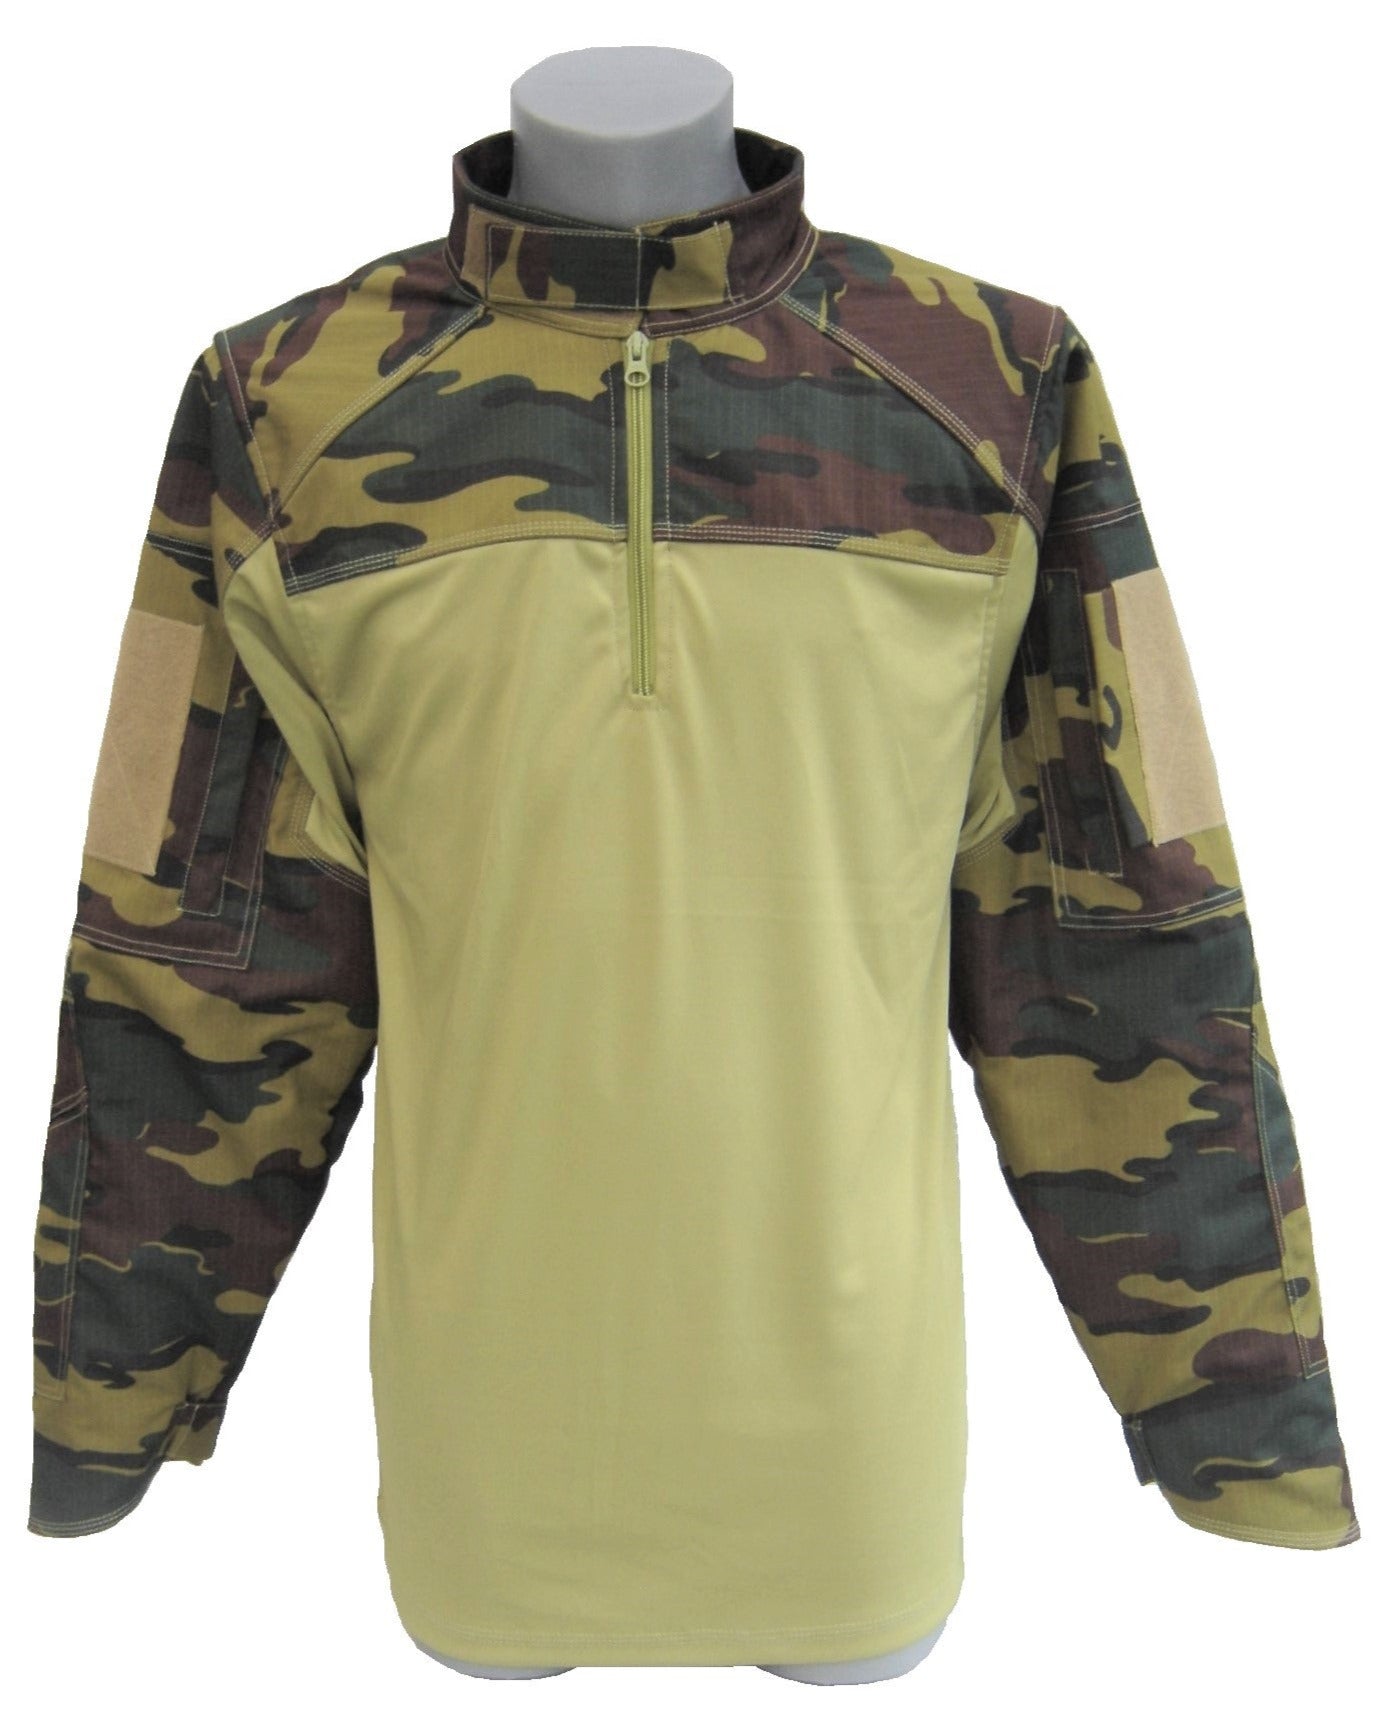 Combat shirt Woodland UBAC snijbestendig defensie kleding VBR-Belgium